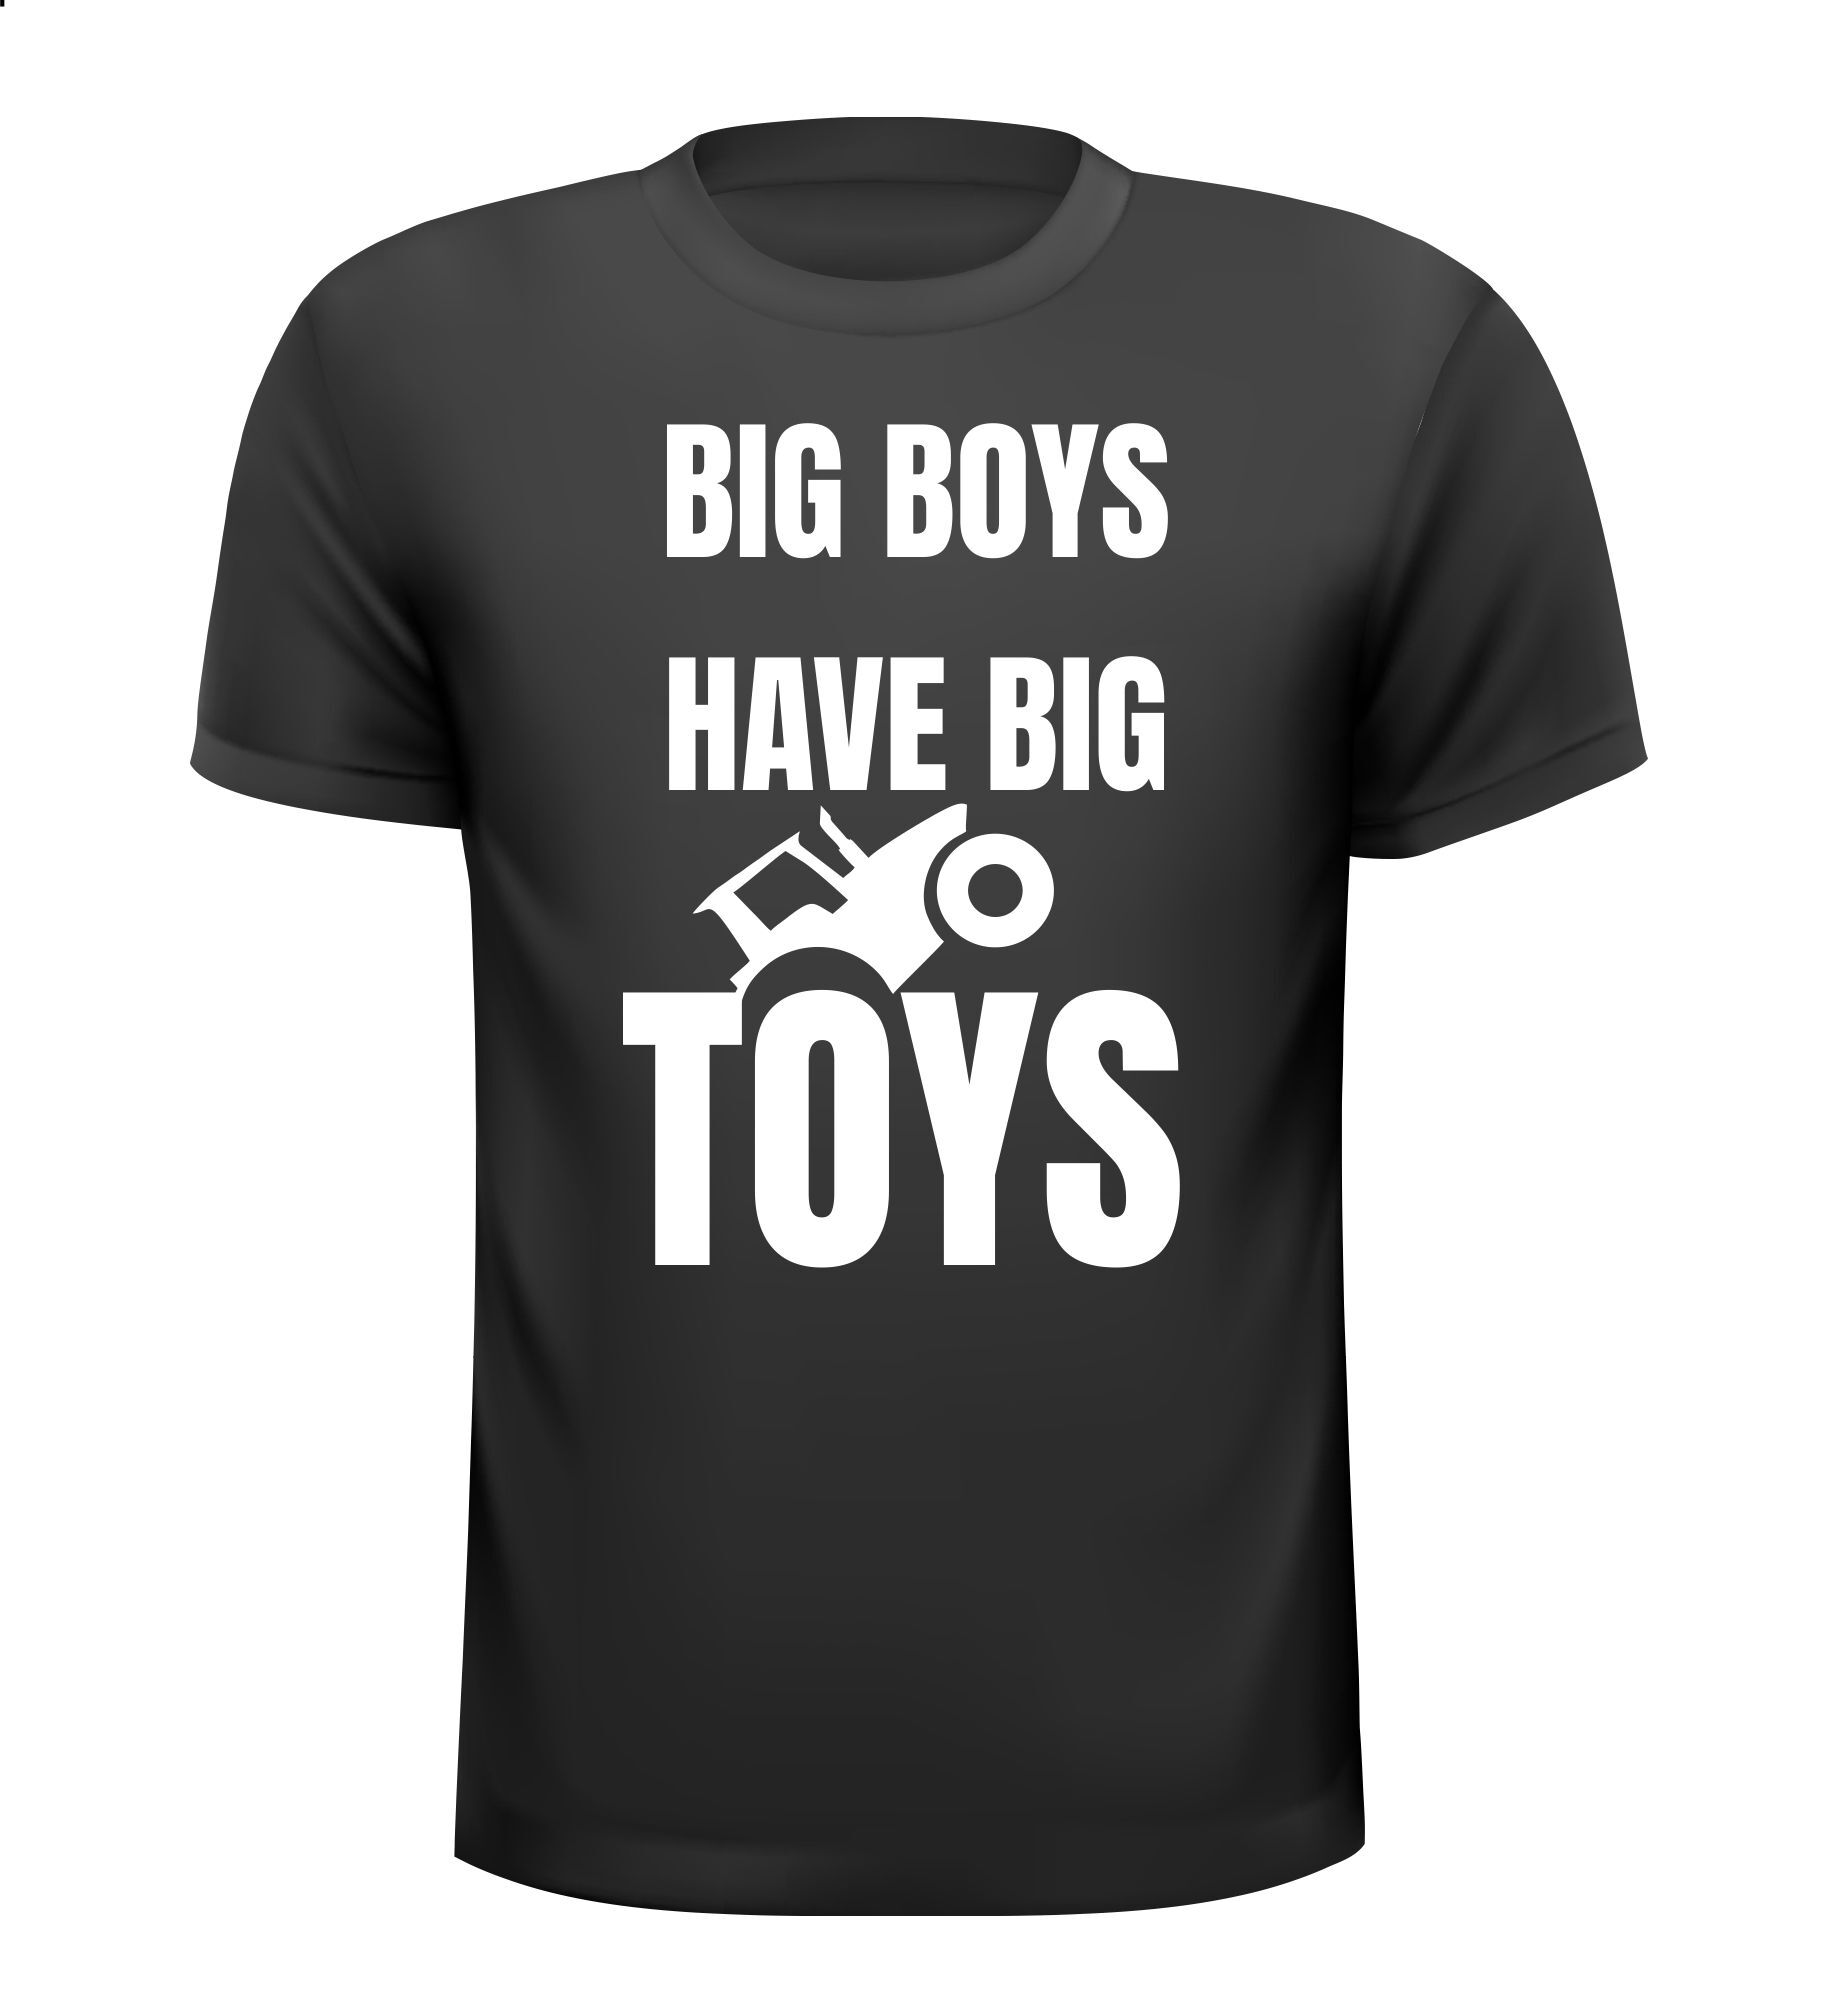 Shirtje voor de boer big boys have big toysl leuk grappig stoer T-shirt